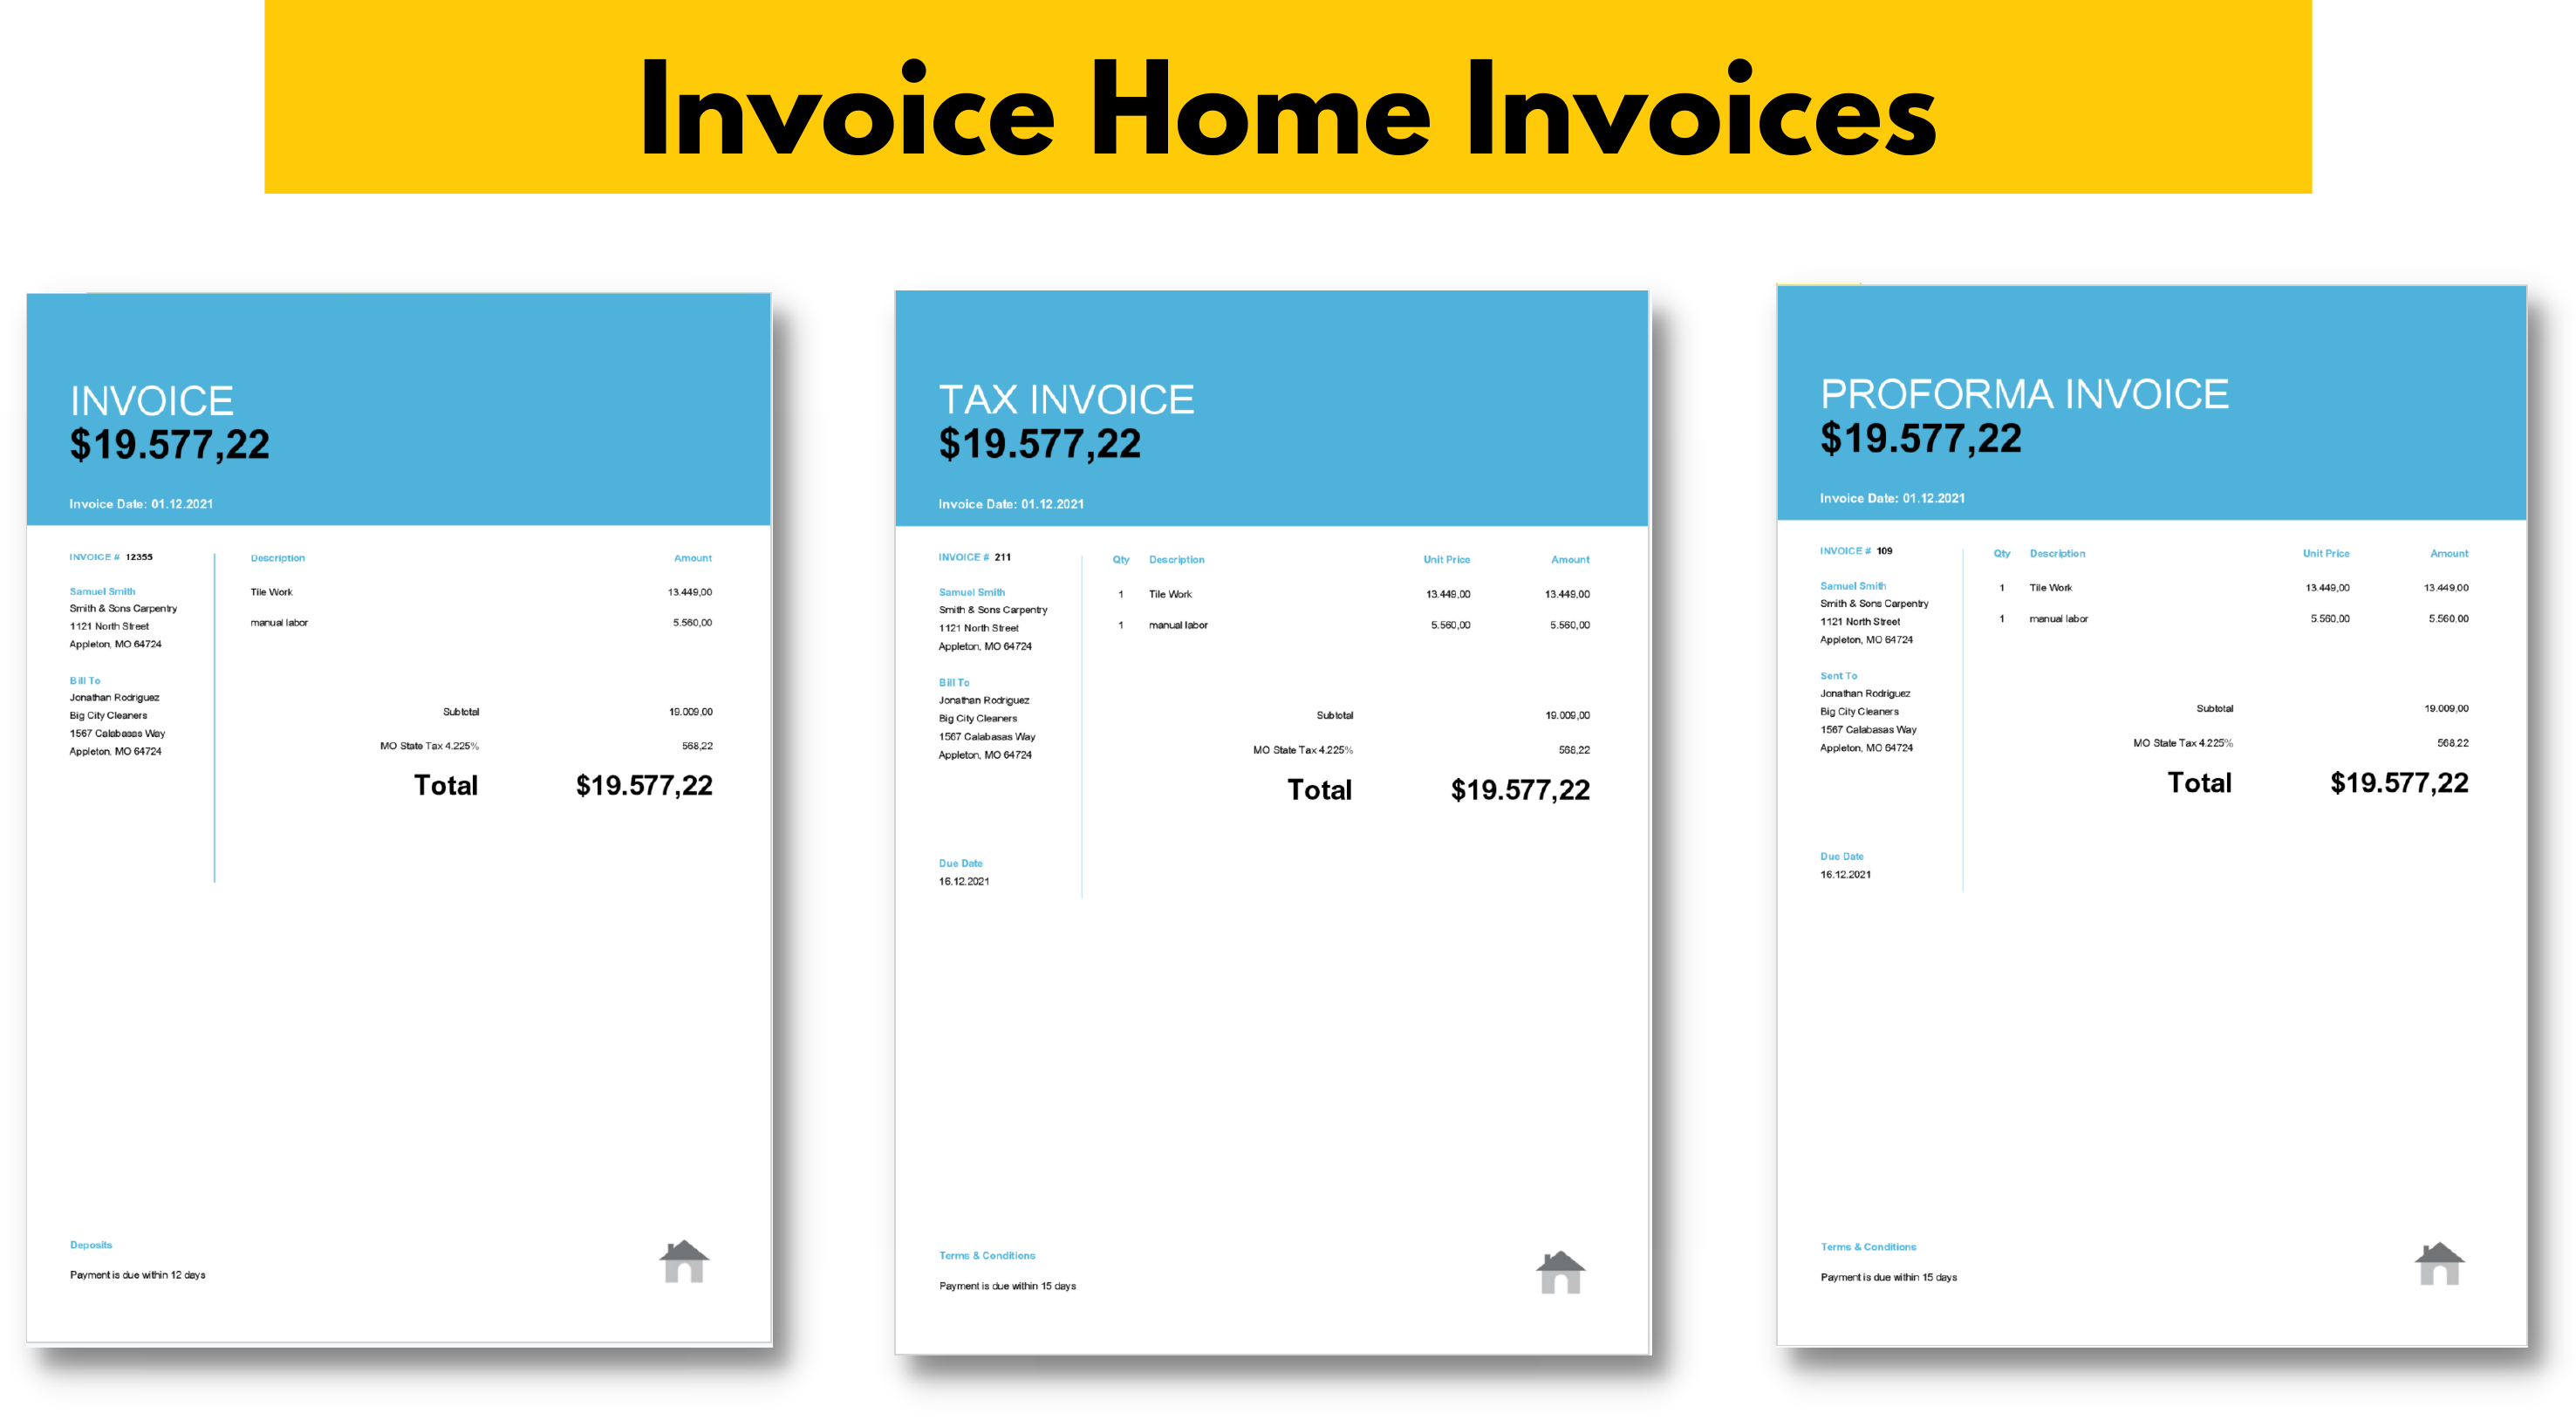 Invoice Home Invoice Types